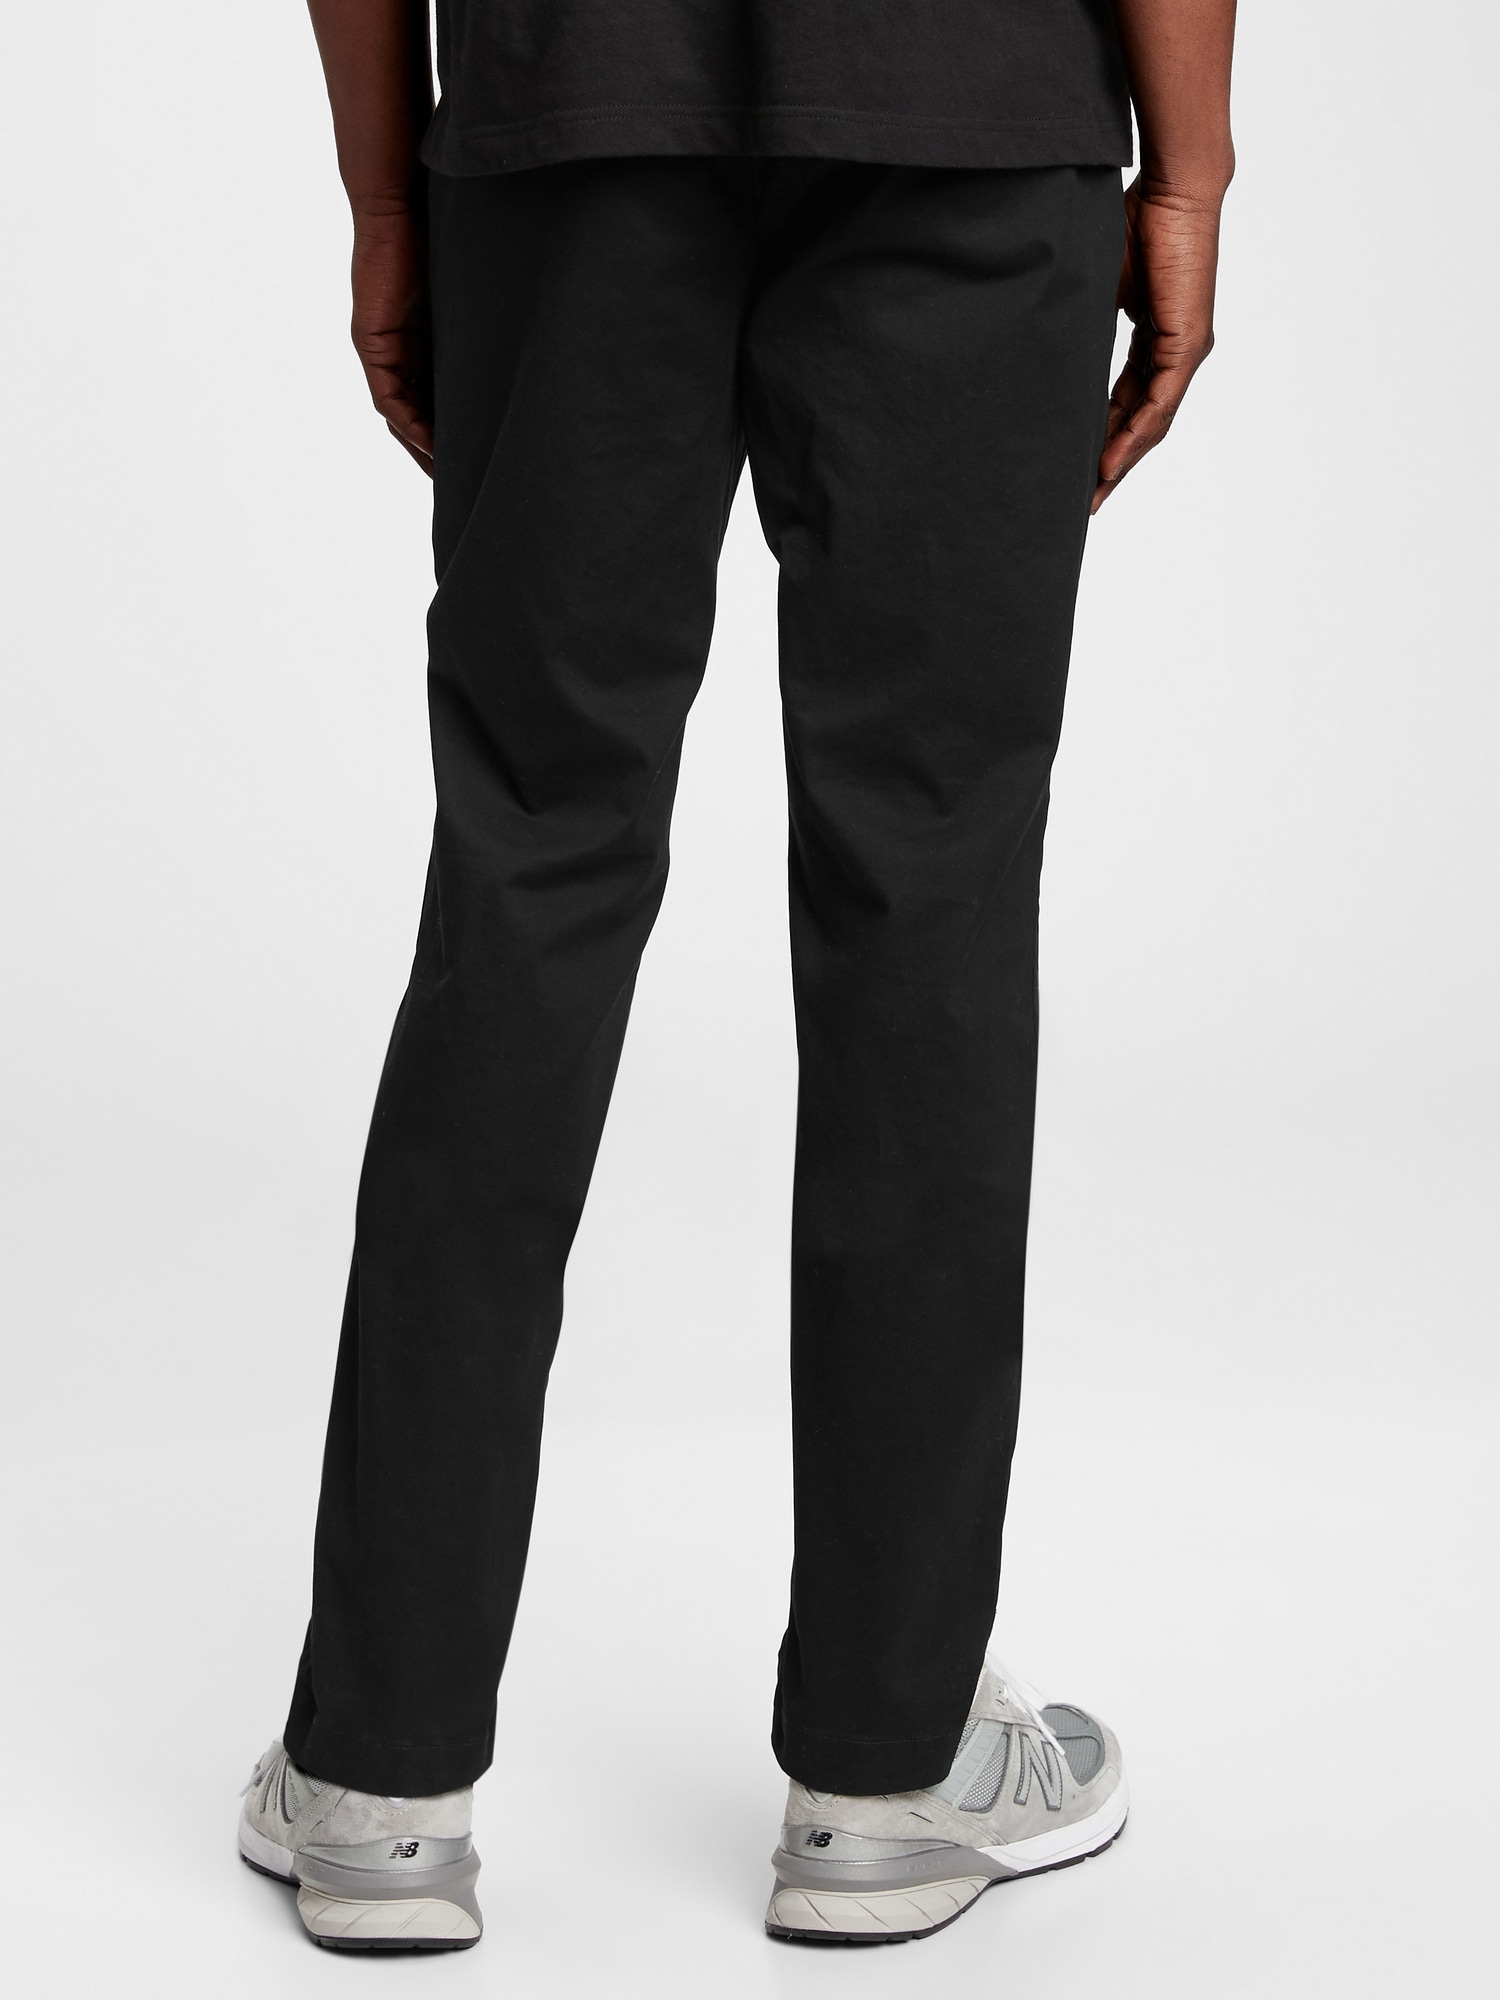 Gap Sable Brown Slim Fit Modern Khakis Men's Size 32/30 NEW - beyond  exchange